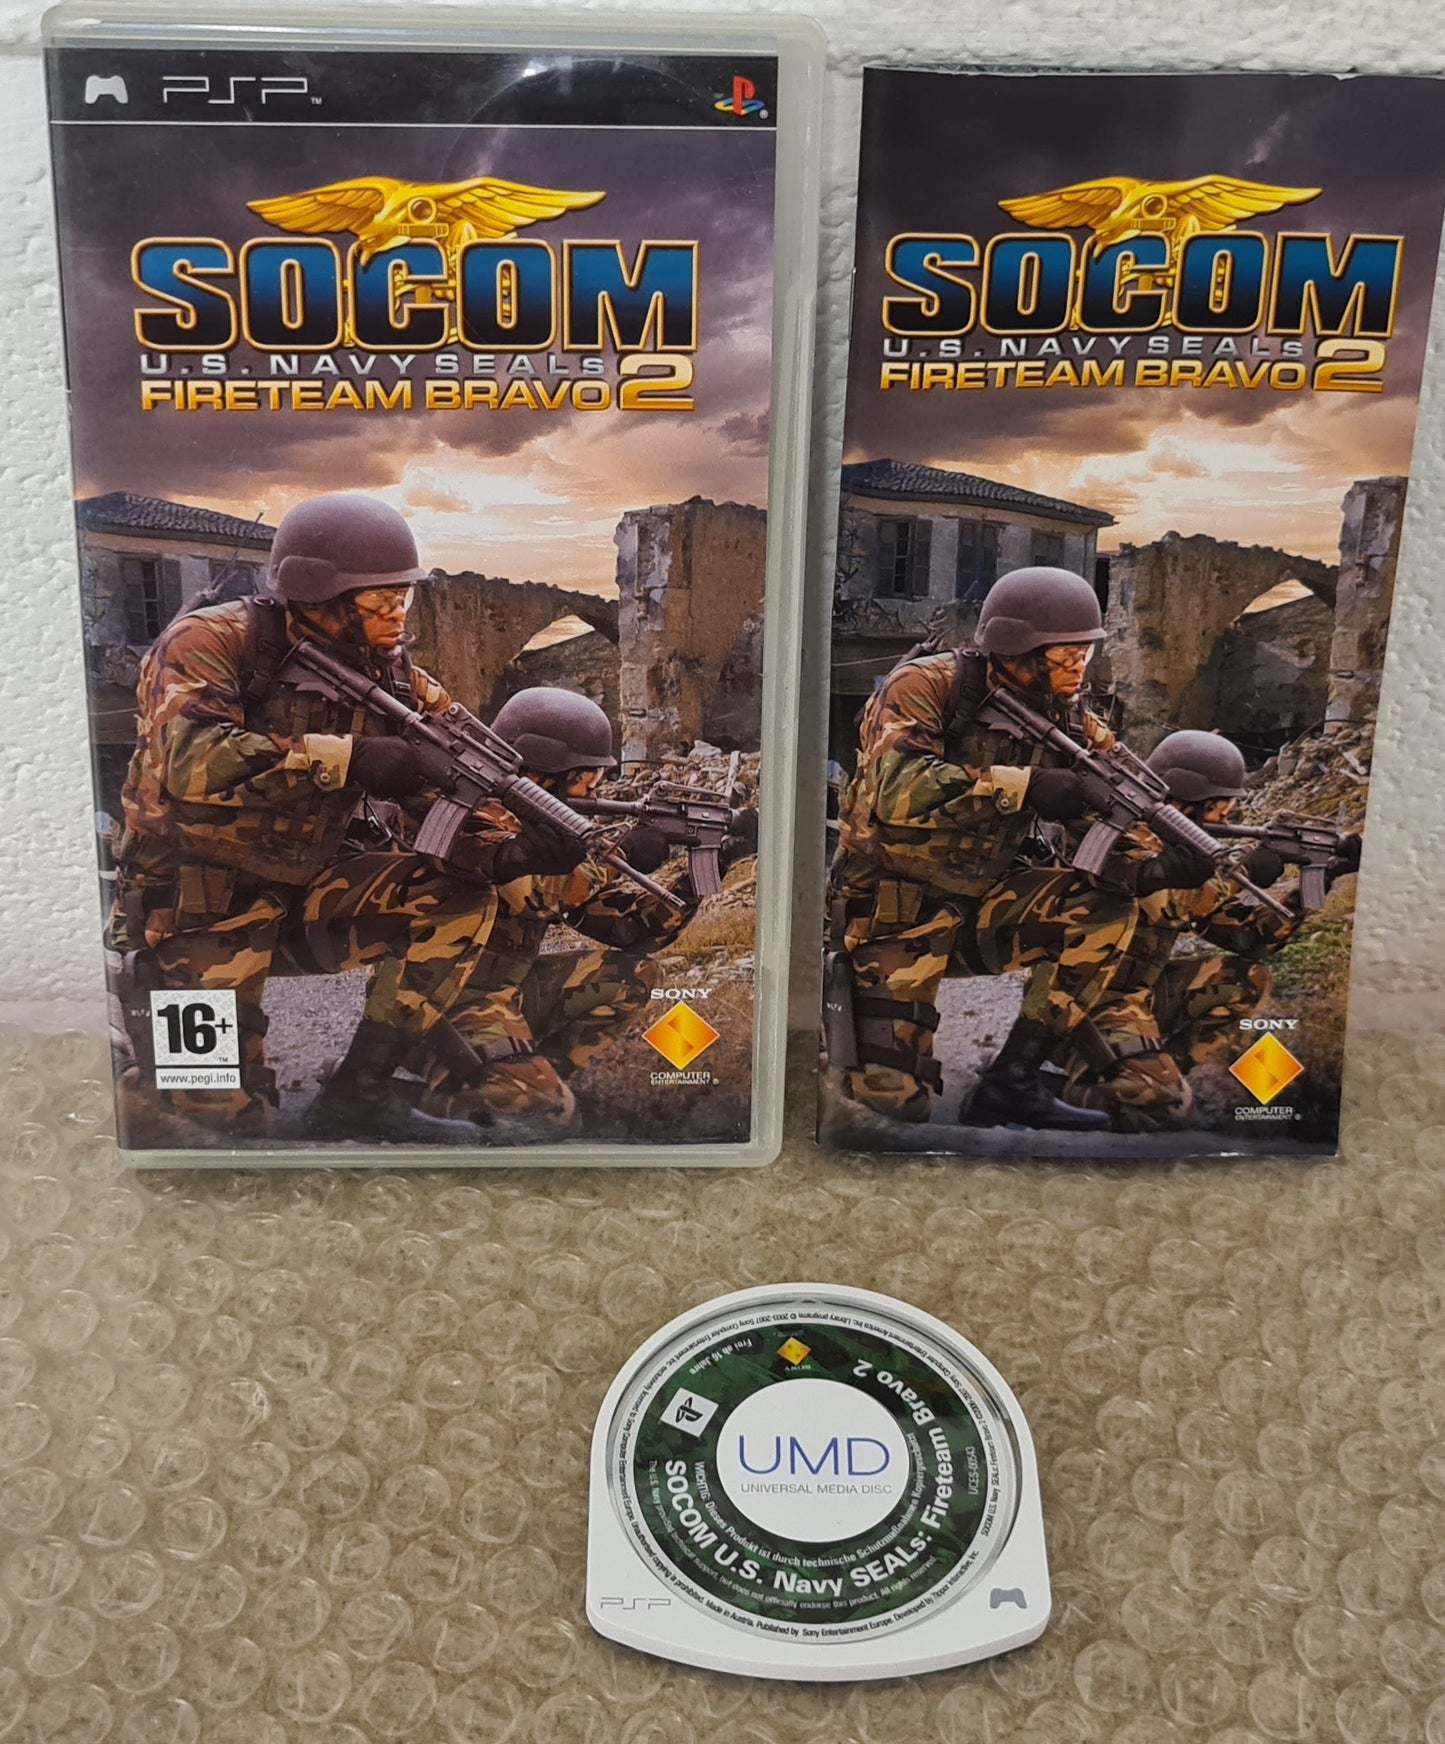  SOCOM U.S. Navy Seals Fireteam Bravo 2 - Sony PSP